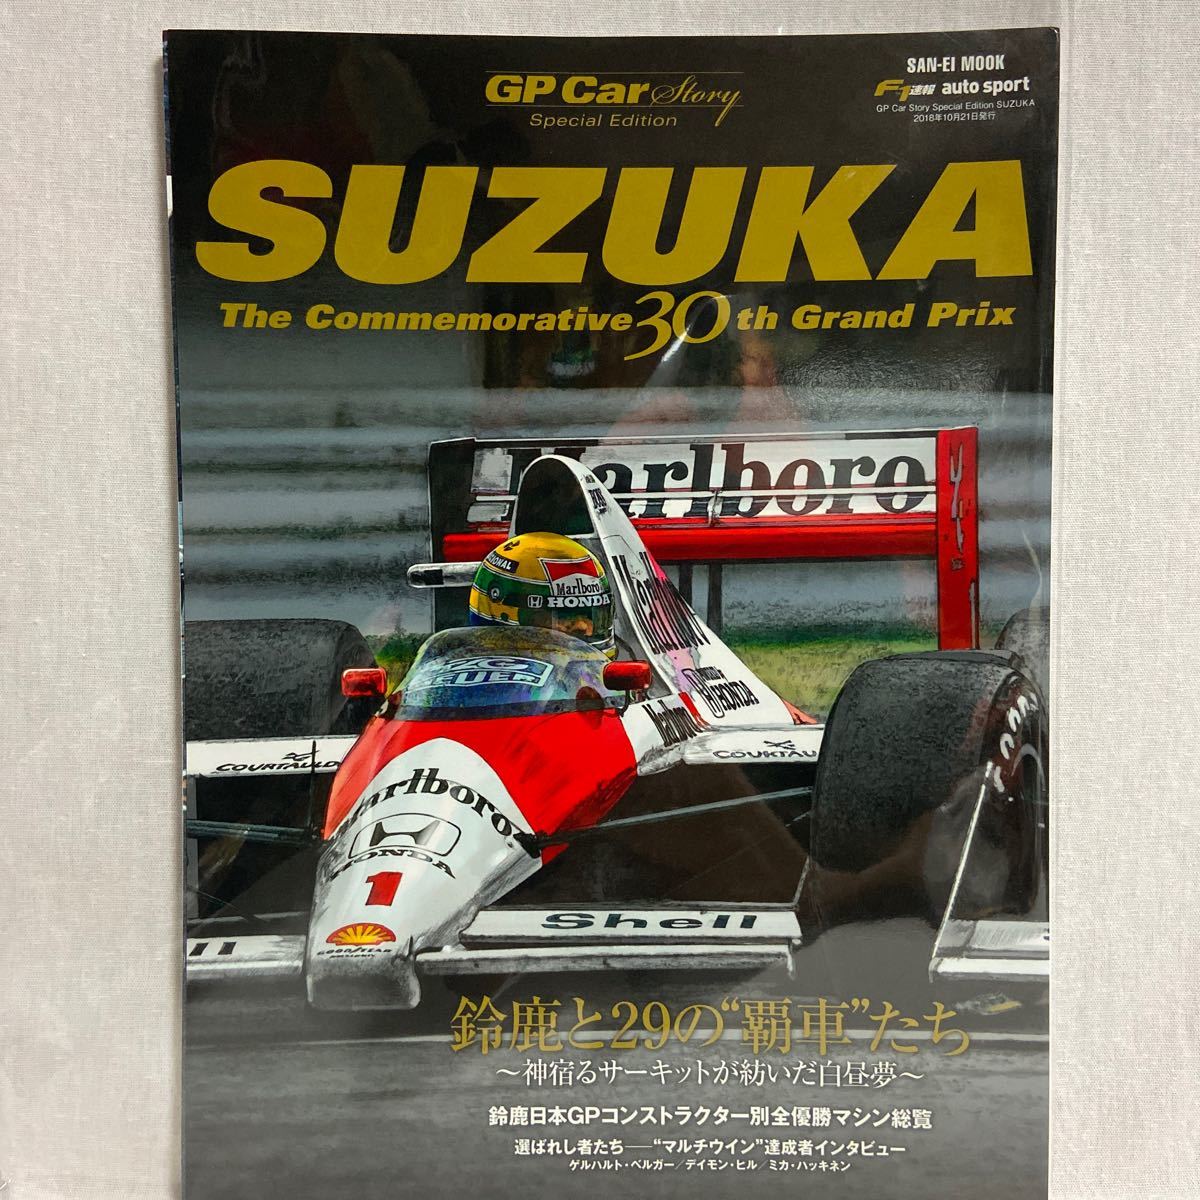 GP Car Story Special Edition F1 срочное сообщение Suzuka Grand Prix 30 anniversary commemoration книга@ McLAREN Honda i-ll тонн * Senna Ferrari Schumacher 